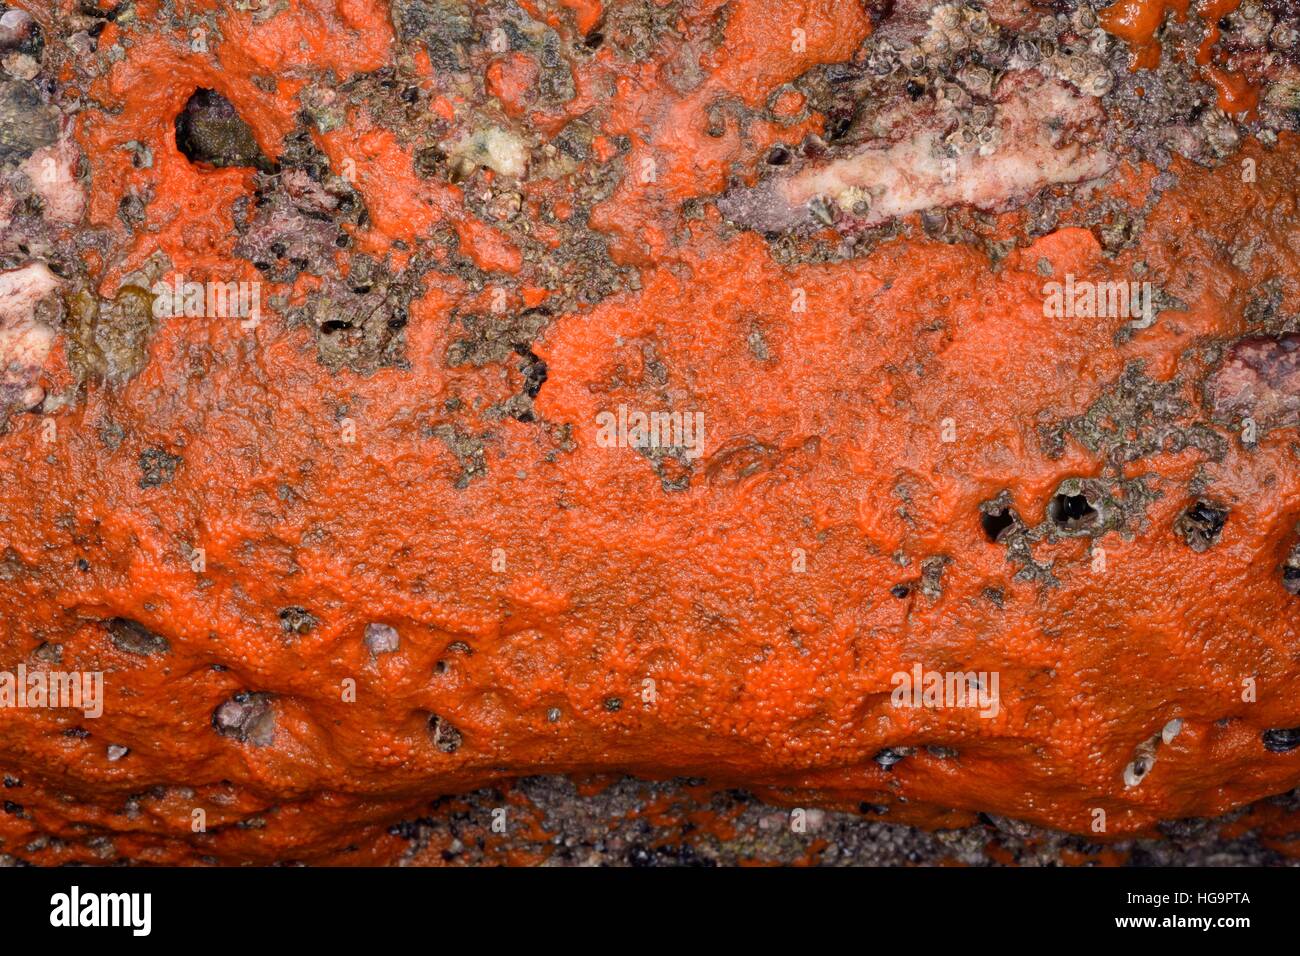 Crumb-of-bread sponge (Hymeniacidon perlevis) in its bright orange encrusting form on exposed intertidal rocks, Cornwall, UK. Stock Photo